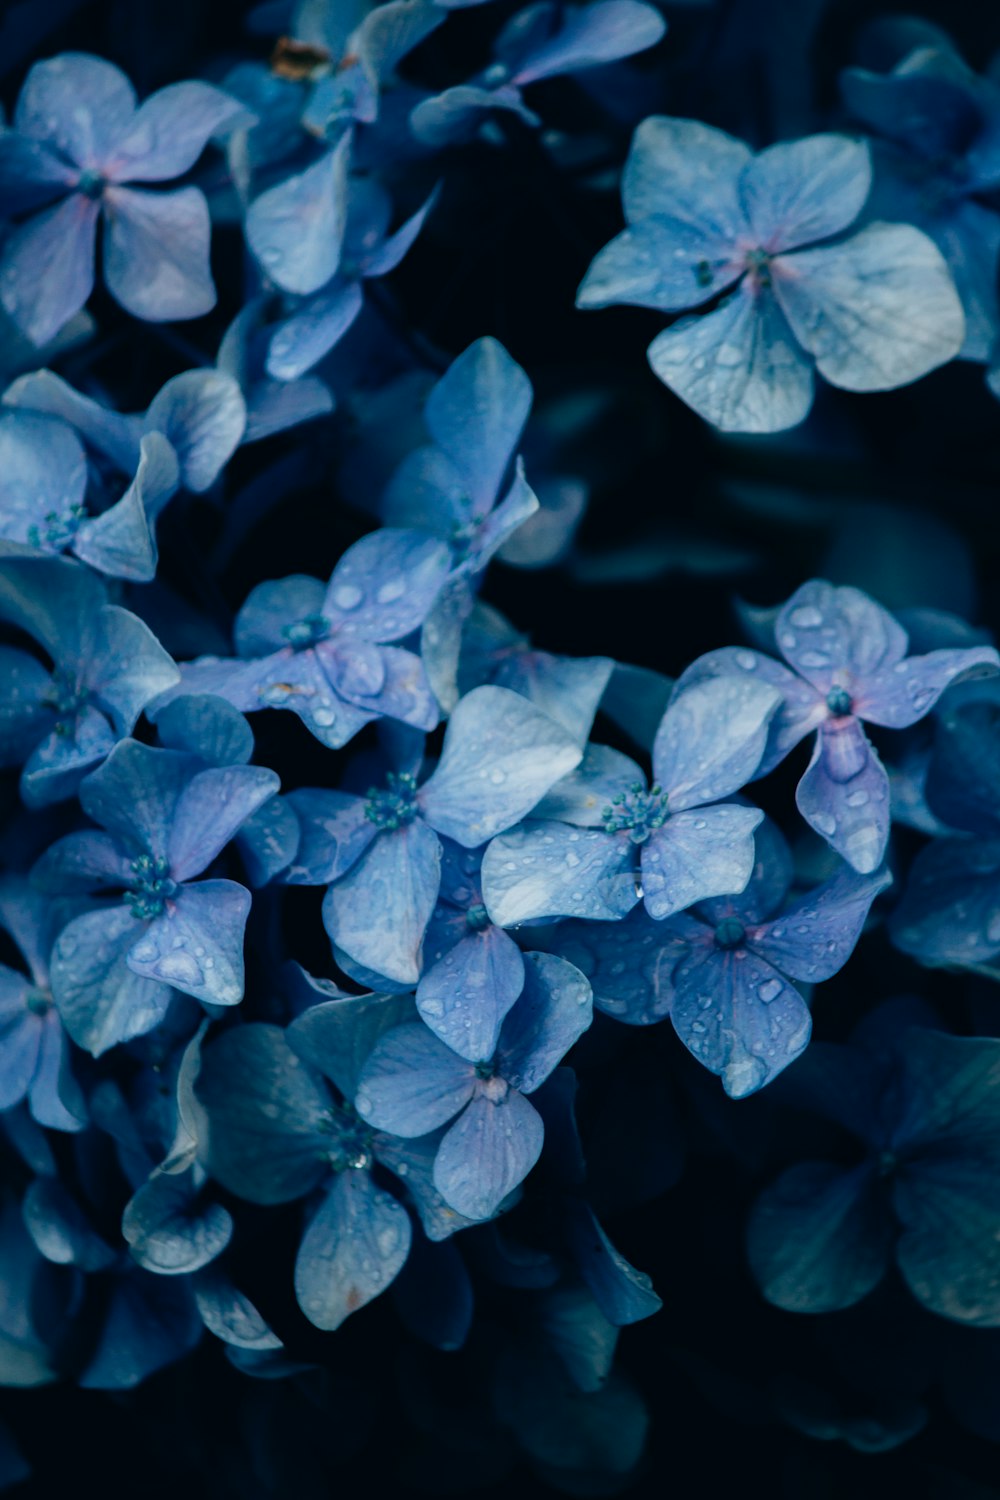 foglie viola nella fotografia ravvicinata